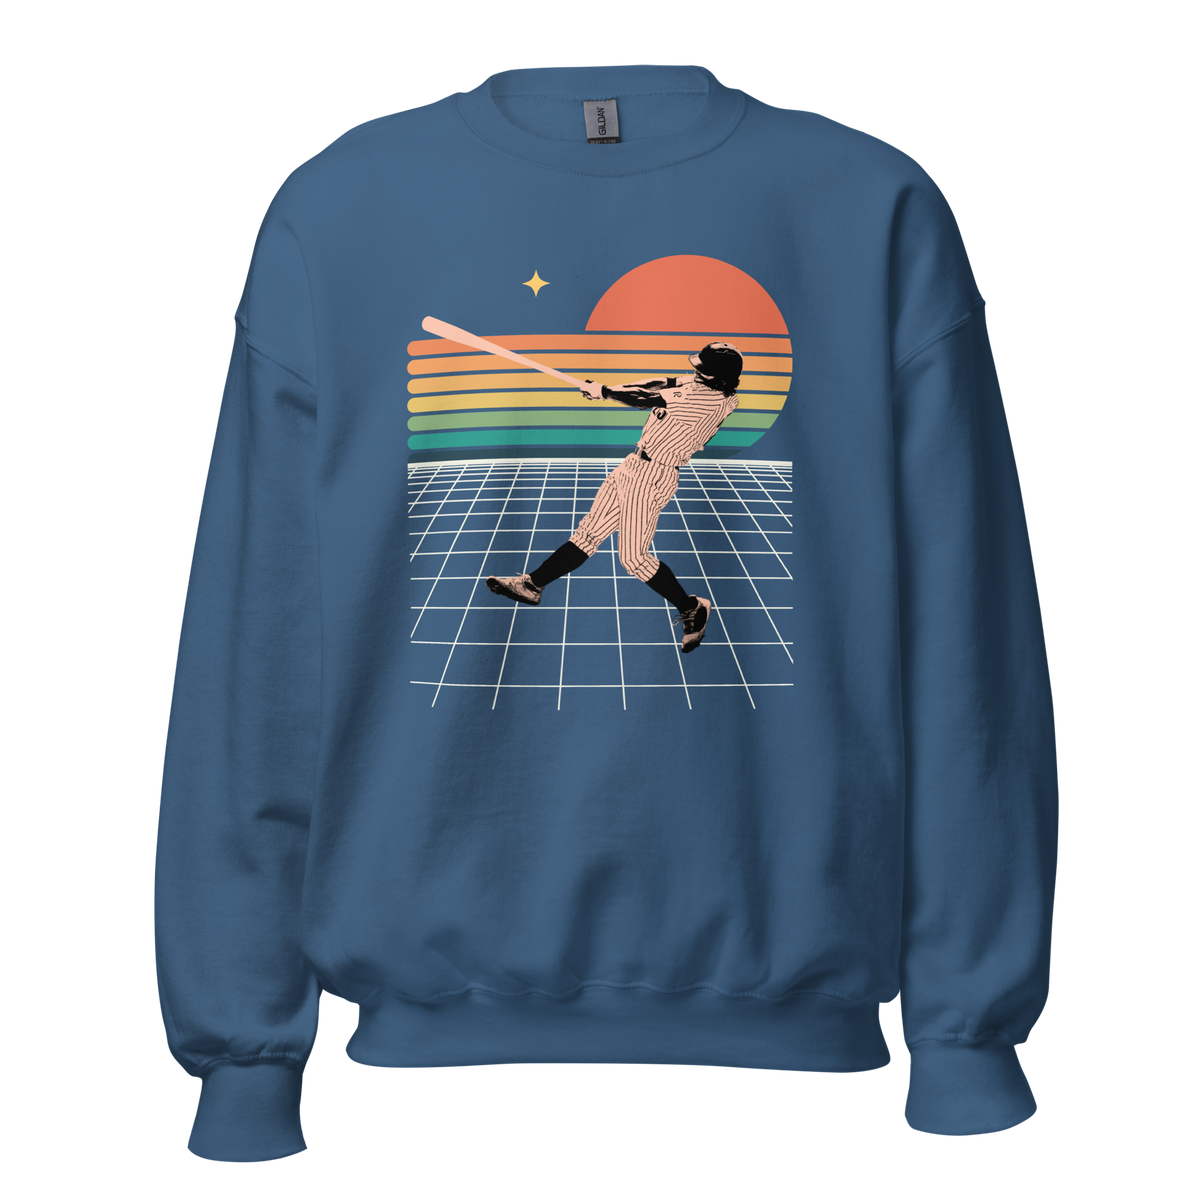 Retro Moonshot Sweatshirt